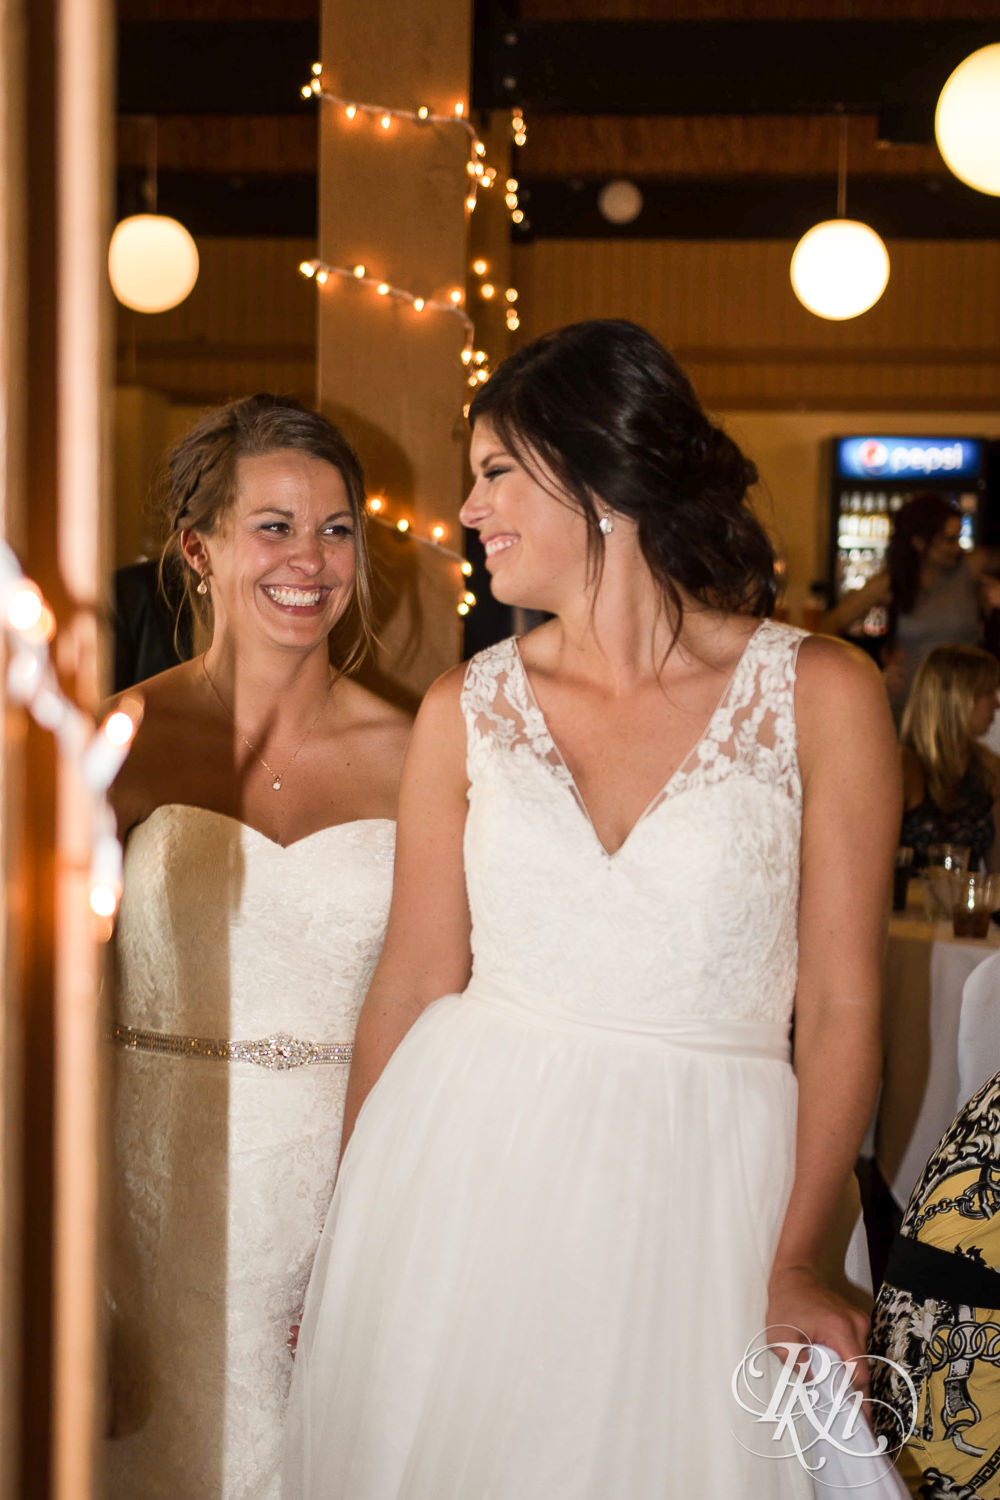 Lesbian brides smile during their wedding reception at Spirit Mountain in Duluth, Minnesota.